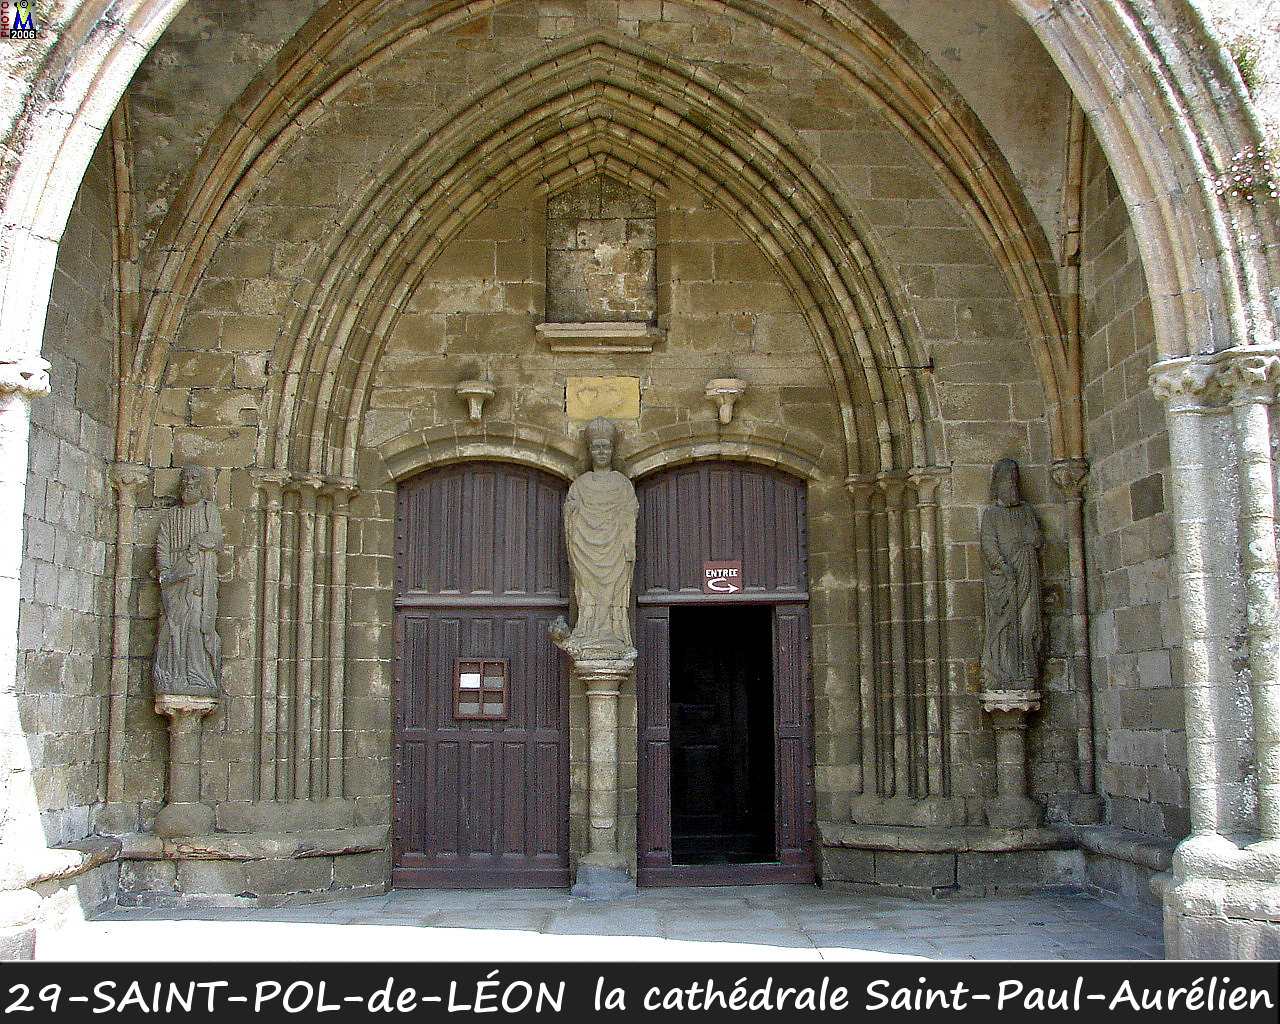 29St-POL-LEON_cathedrale_120.jpg